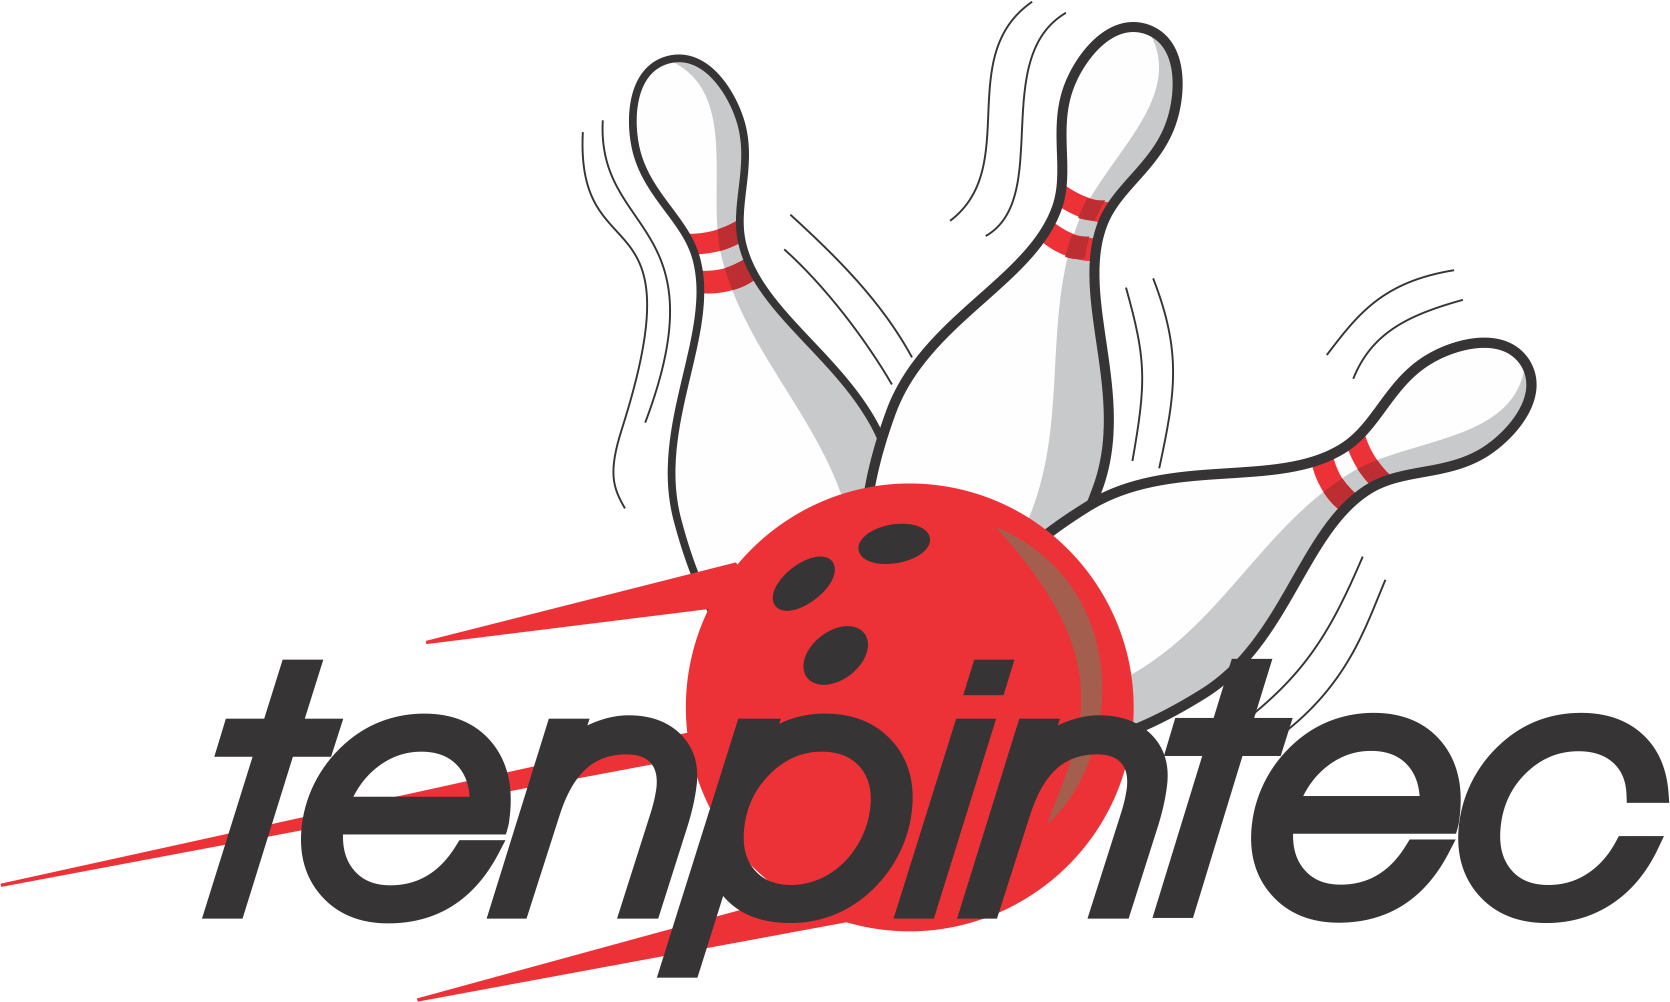 Tenpintec Logo - Bowling Pin Logo (1670x1002)